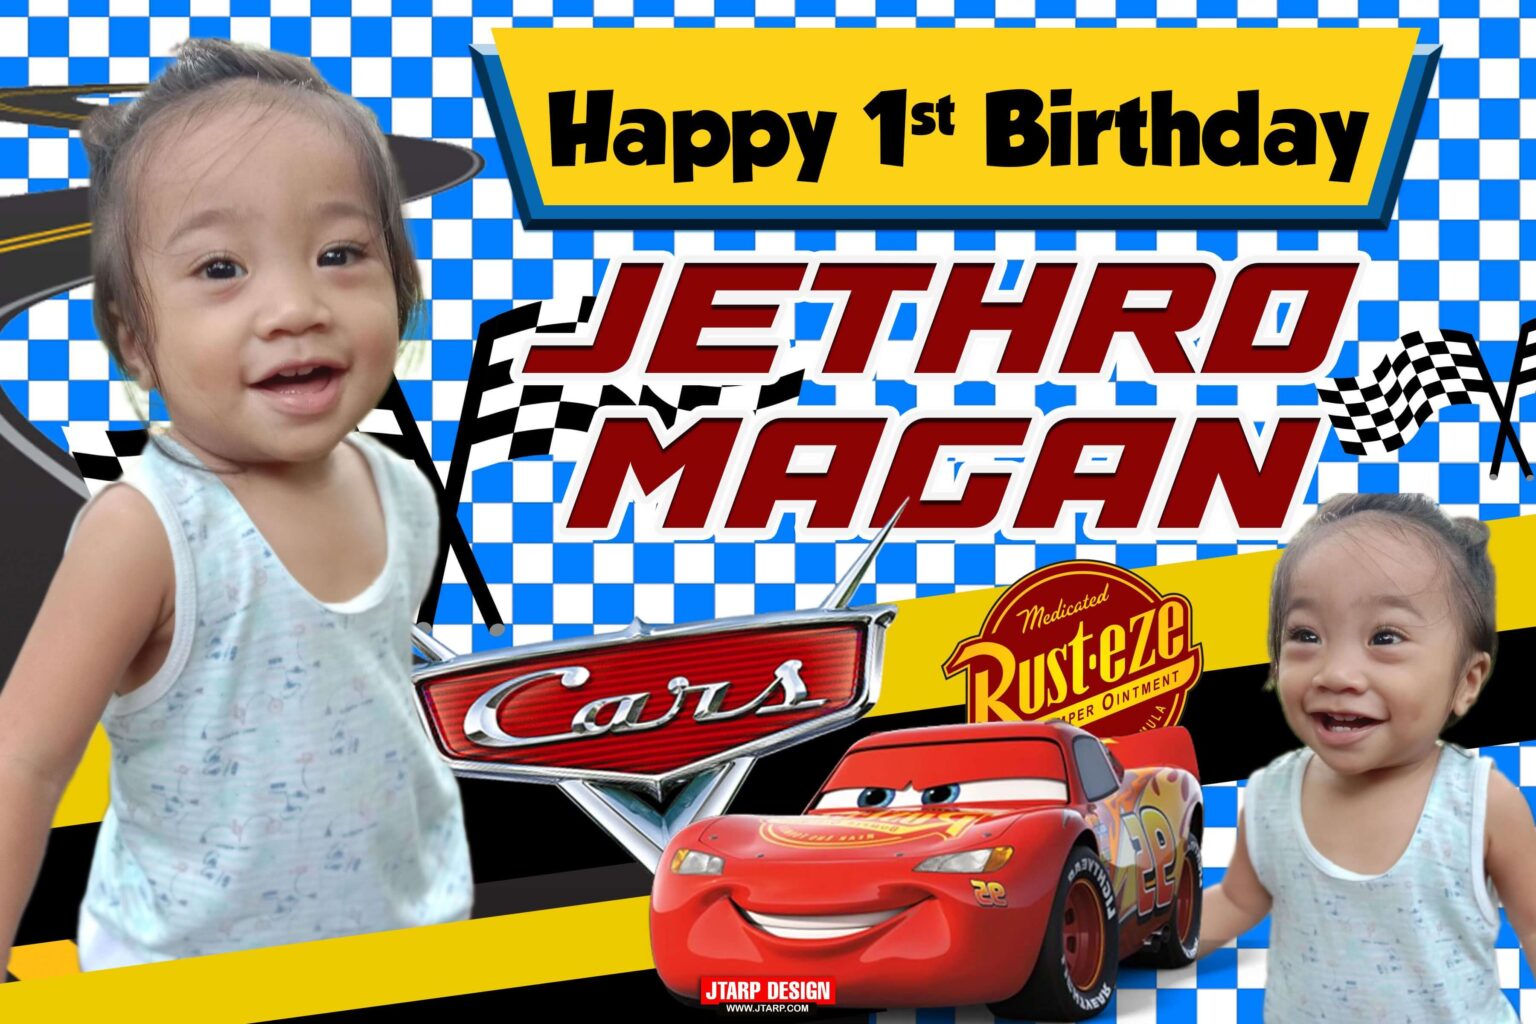 3x2 Happy 1st Birthday Jethro Magan cars mcqueen